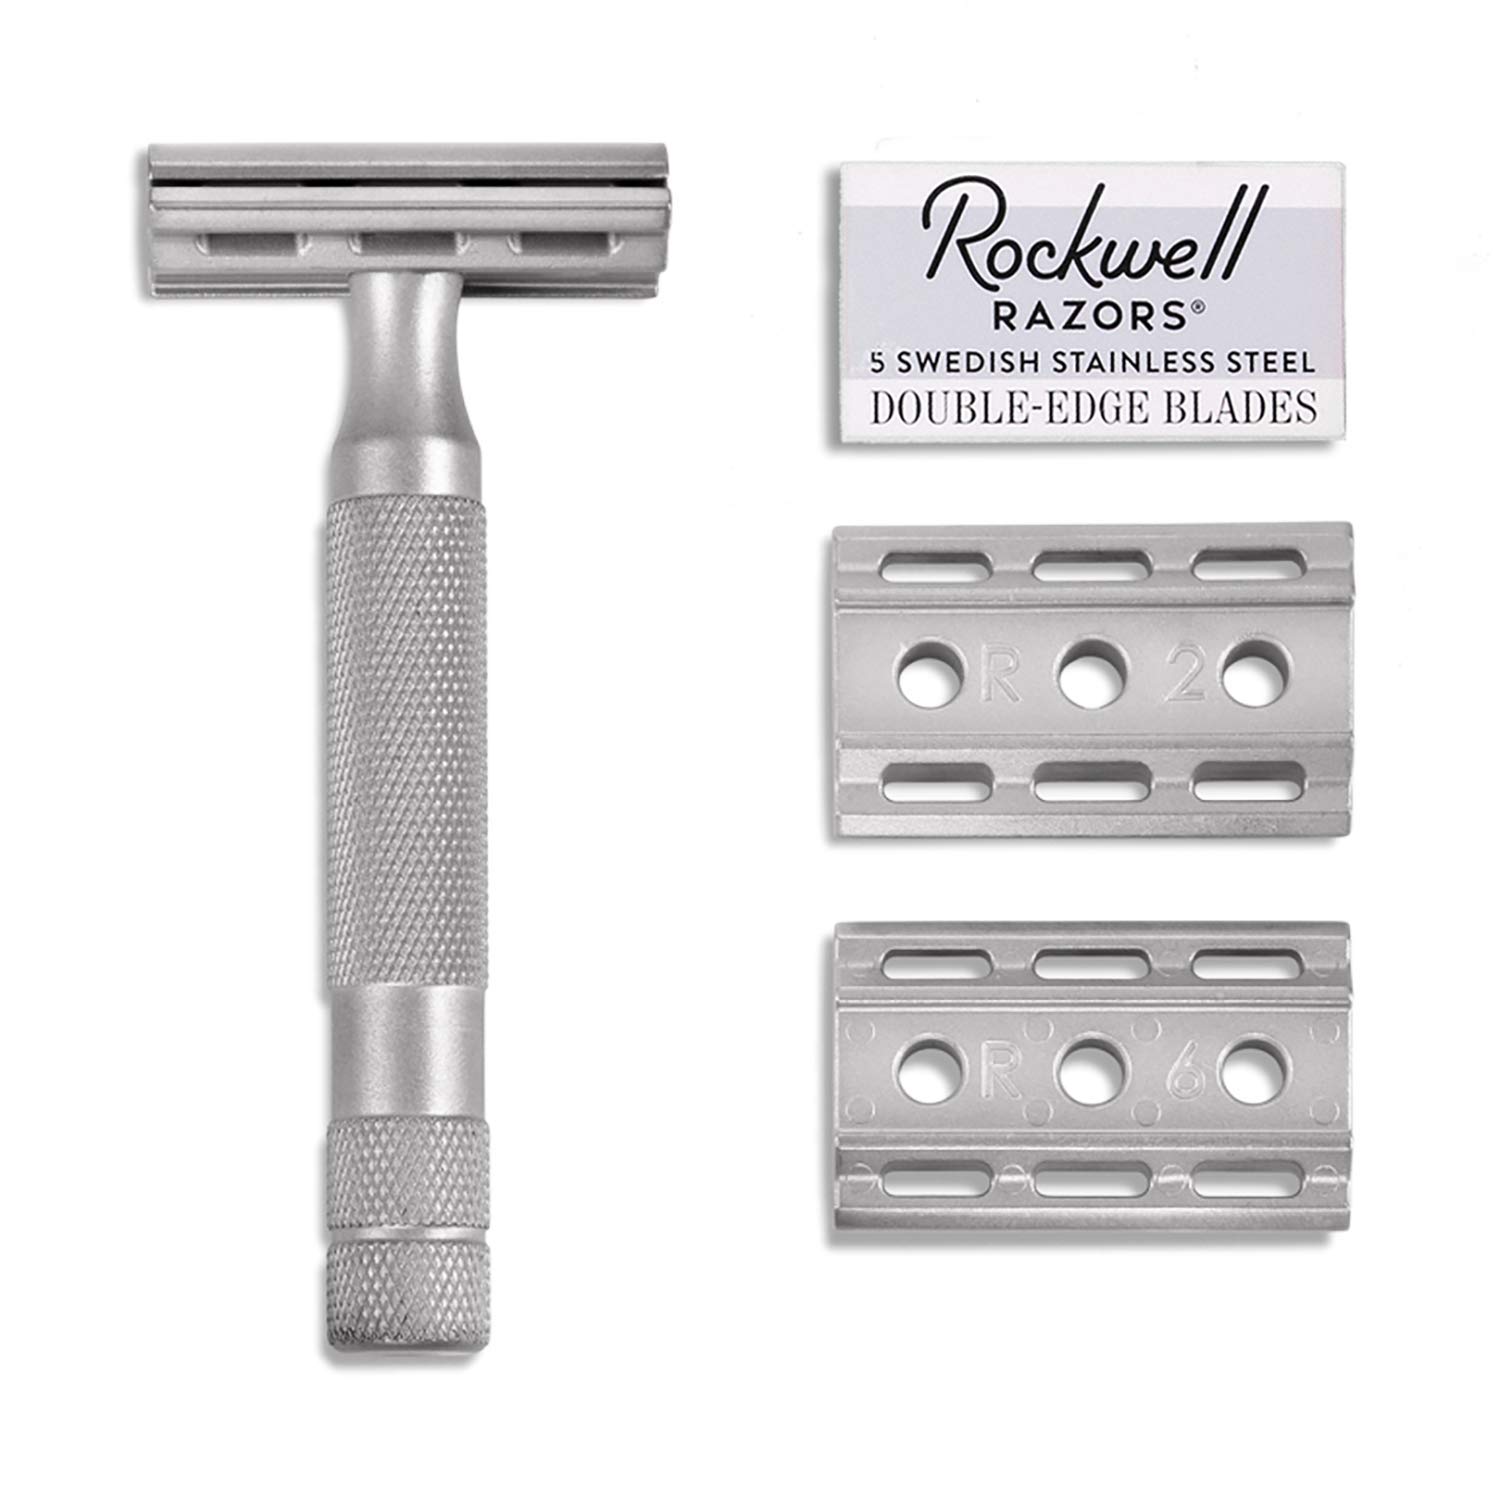 
Rockwell 6S DE razor – Stainless Steel
